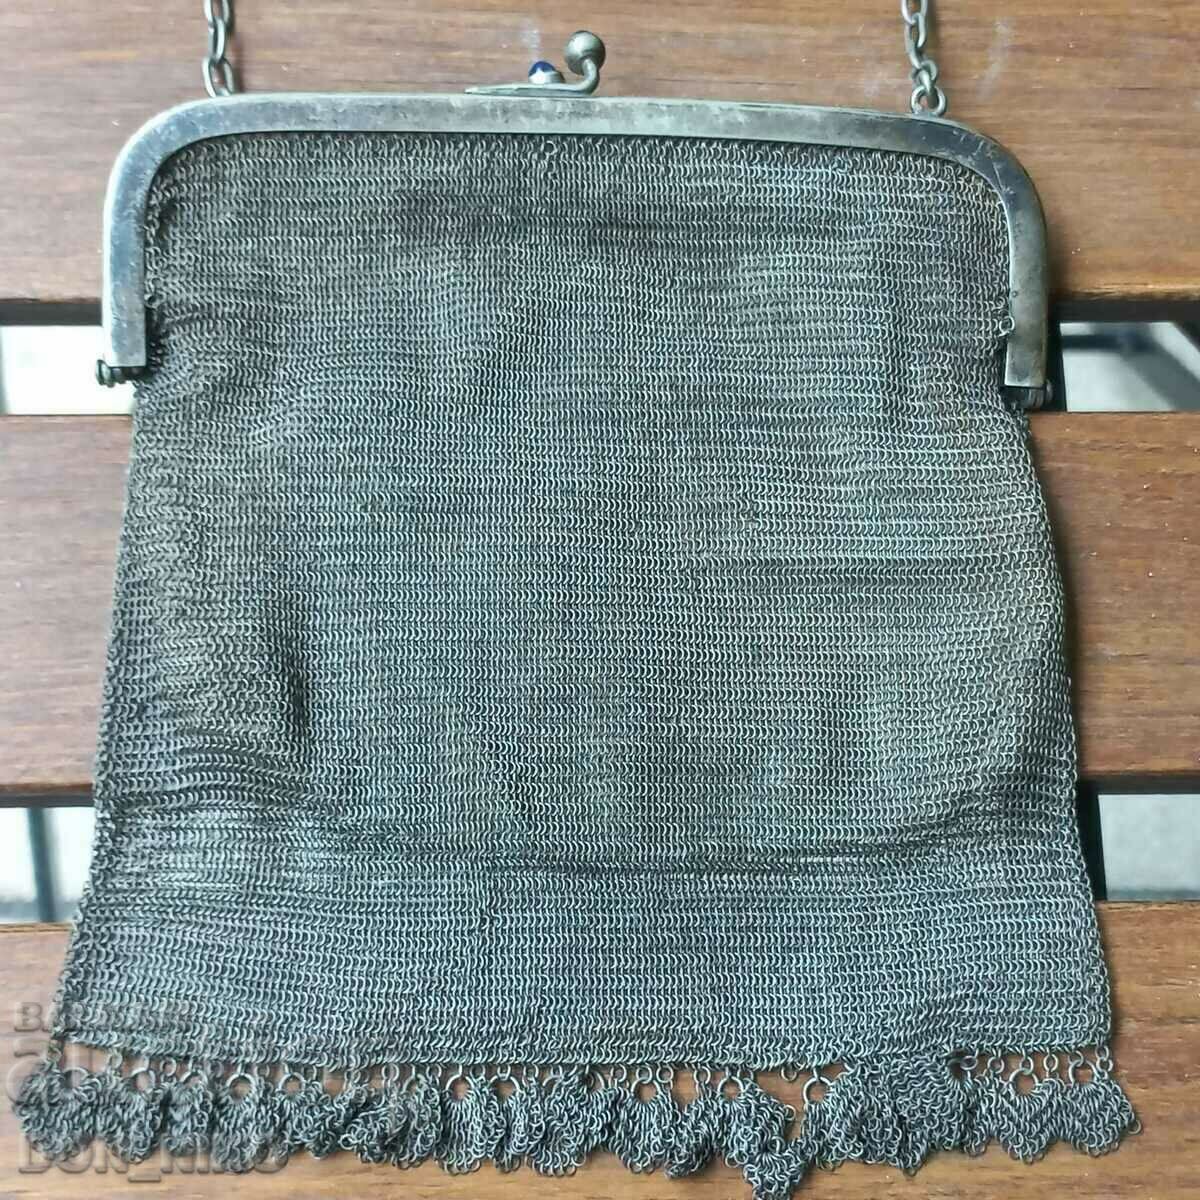 Knitted handbag, England 19th century